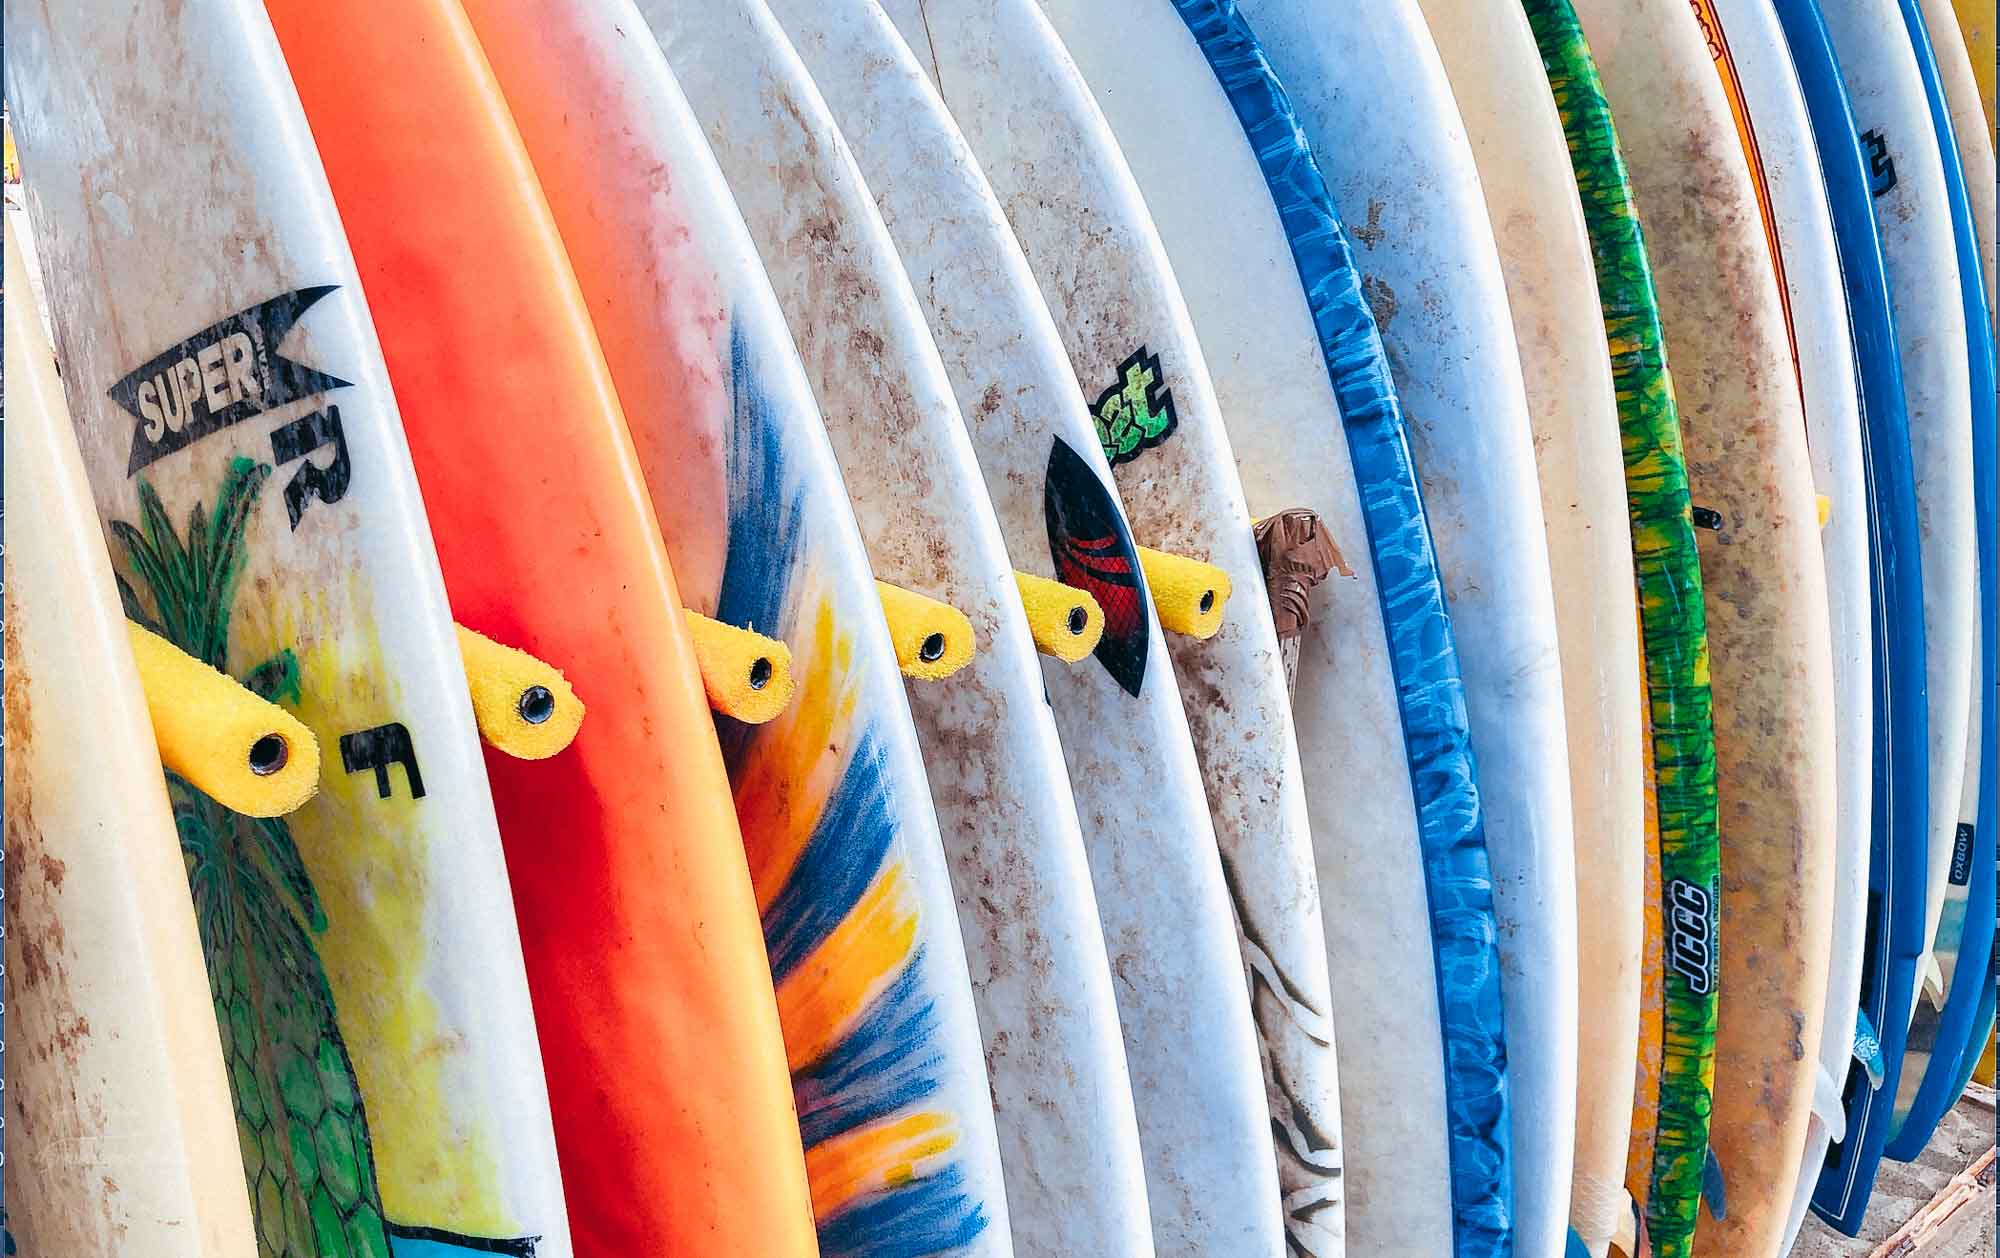 Colorful boards used to go kite surfing in Cabarete, Dominican Republic.